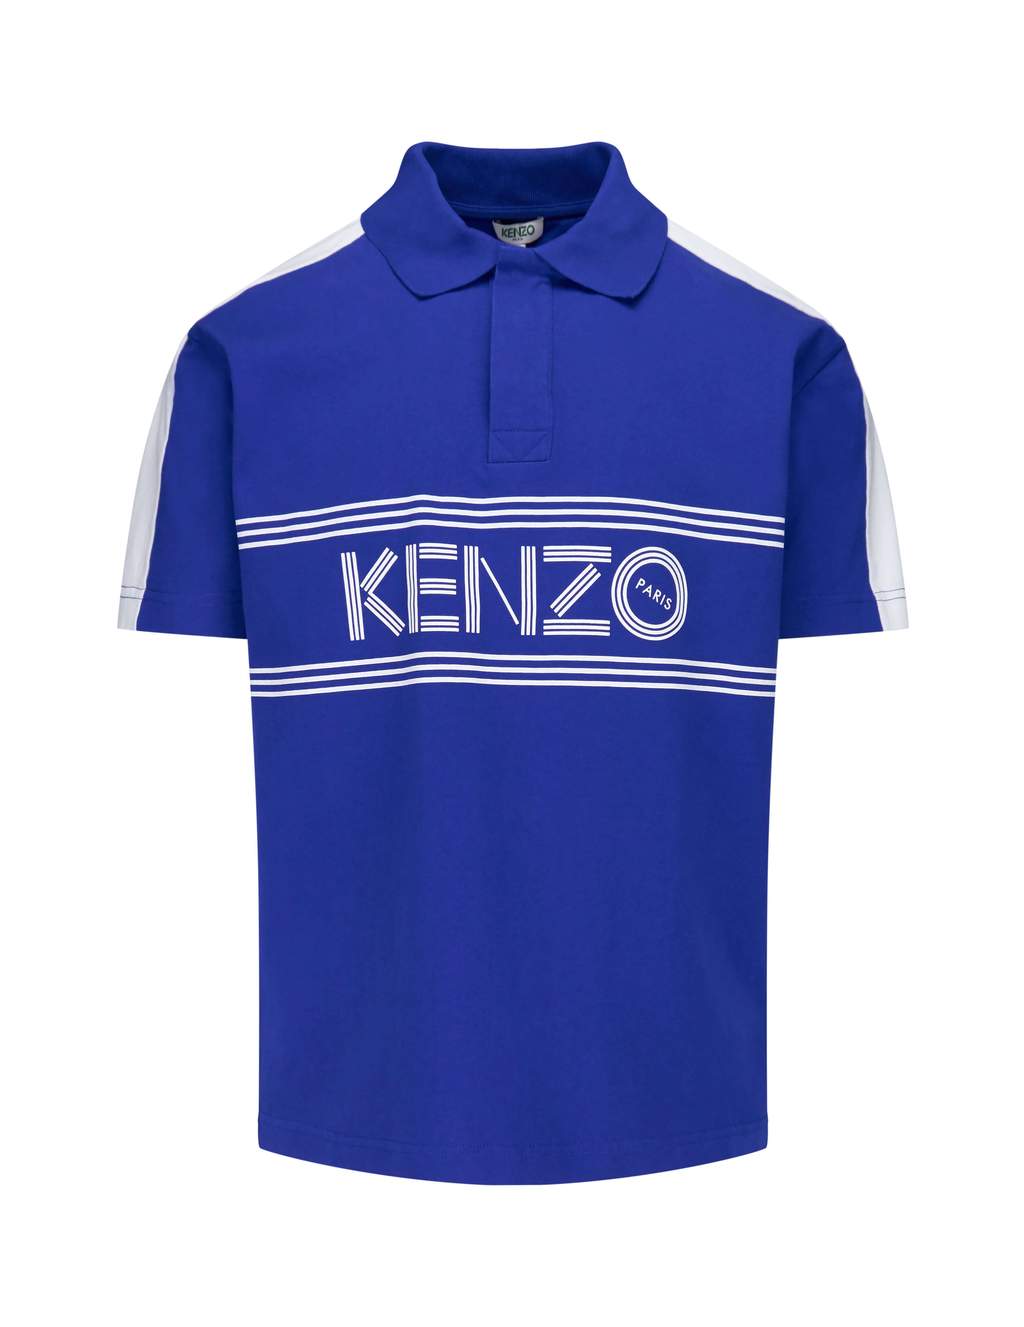 Blue Stripe Logo - Kenzo Men's Blue Stripe Logo Polo Shirt. GIULIOFASHION.COM